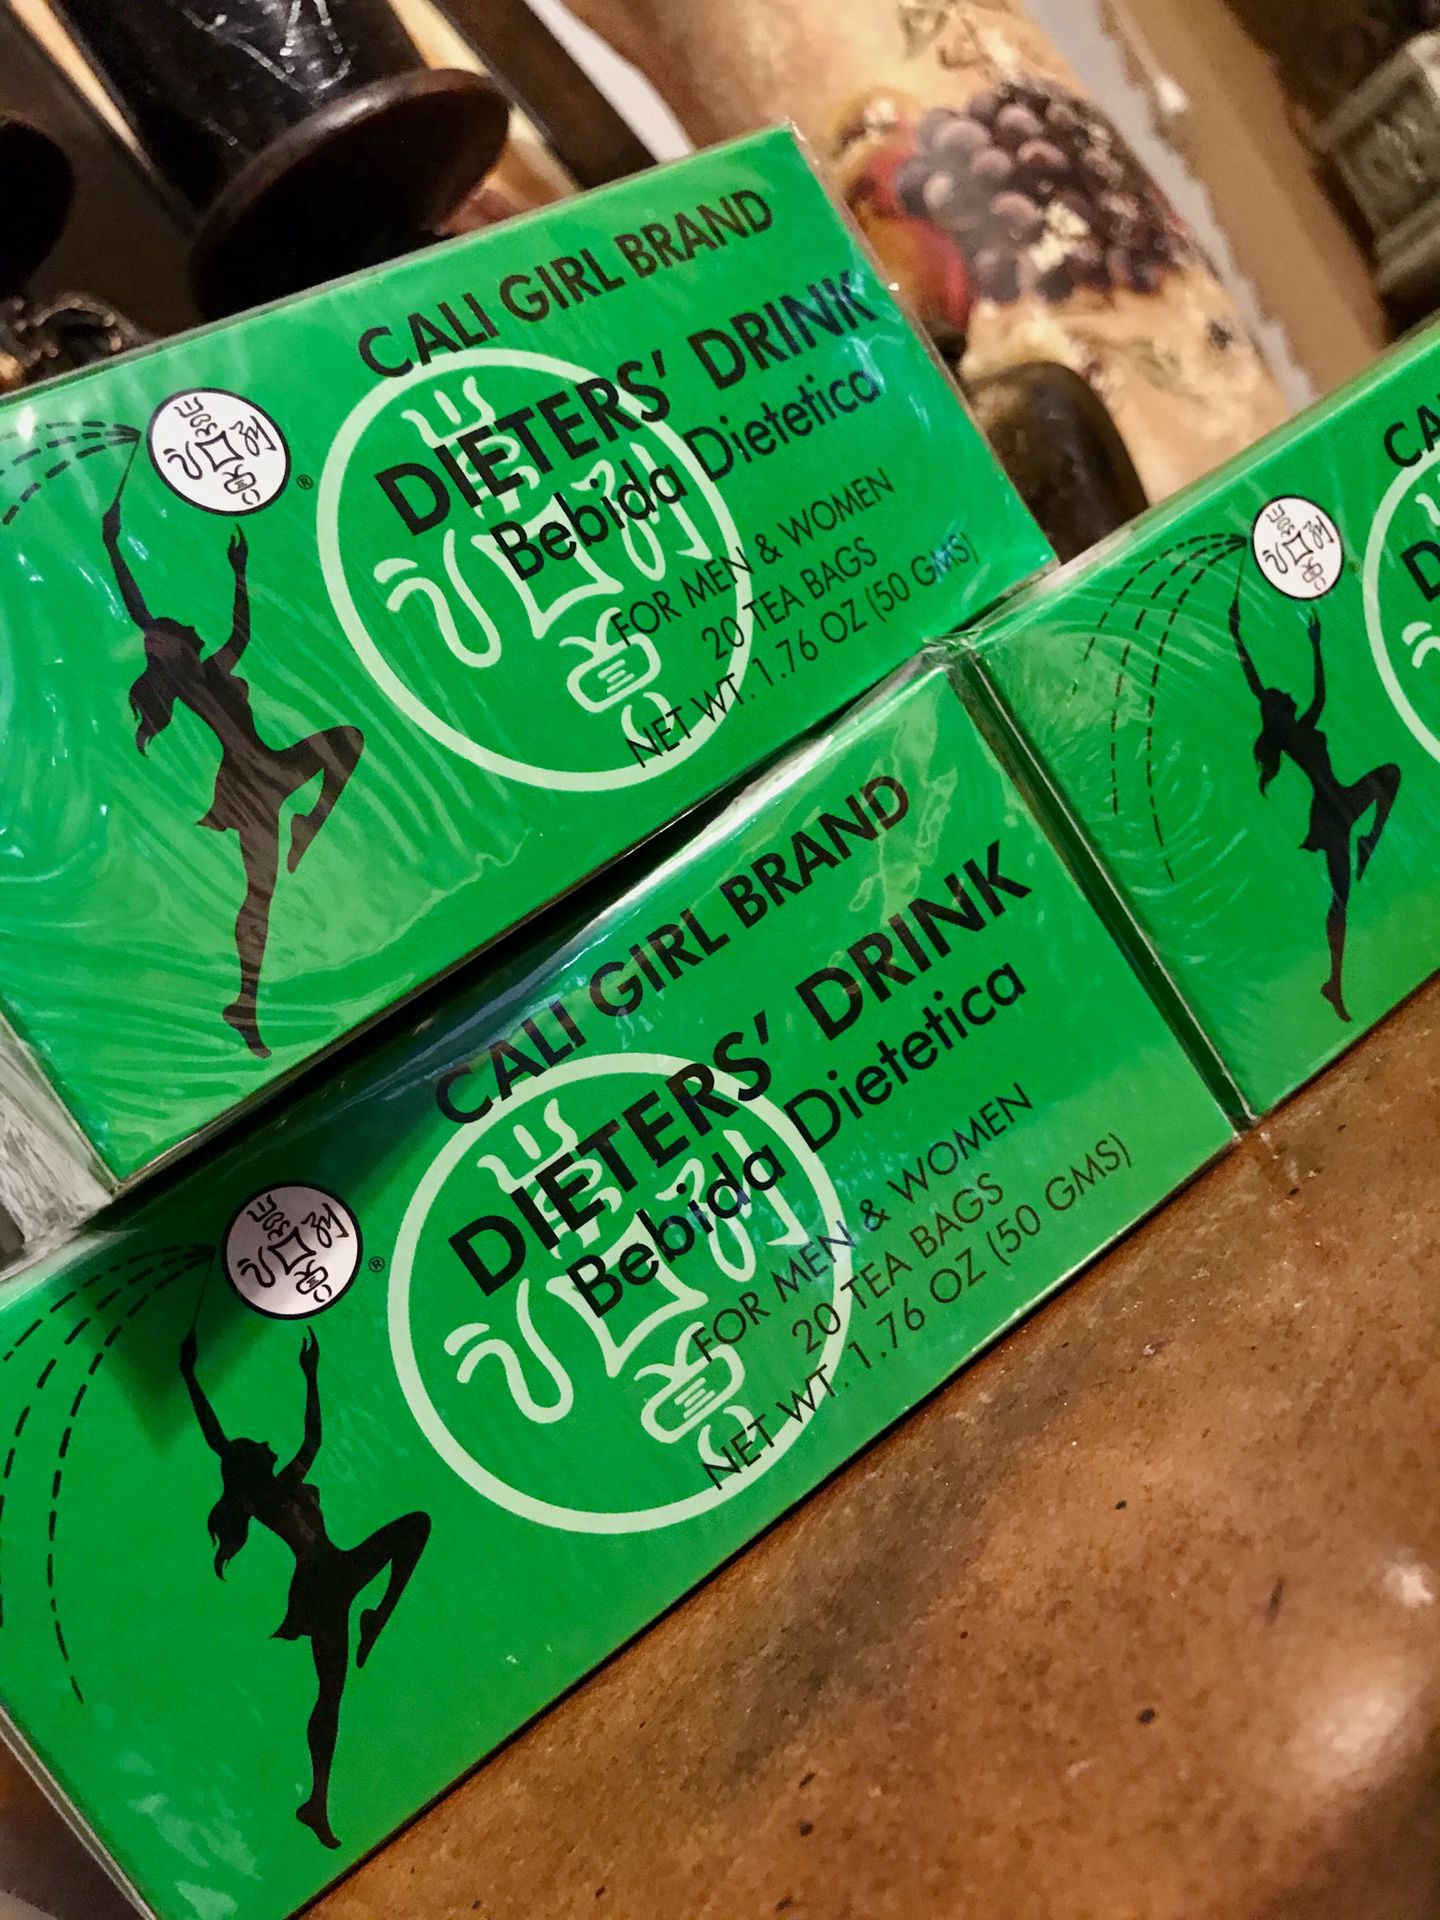 100 tea bags TOTAL Dieters’Drink 5 BOXES WITH 20 Tea Bags ea (Cali Girl Brand).